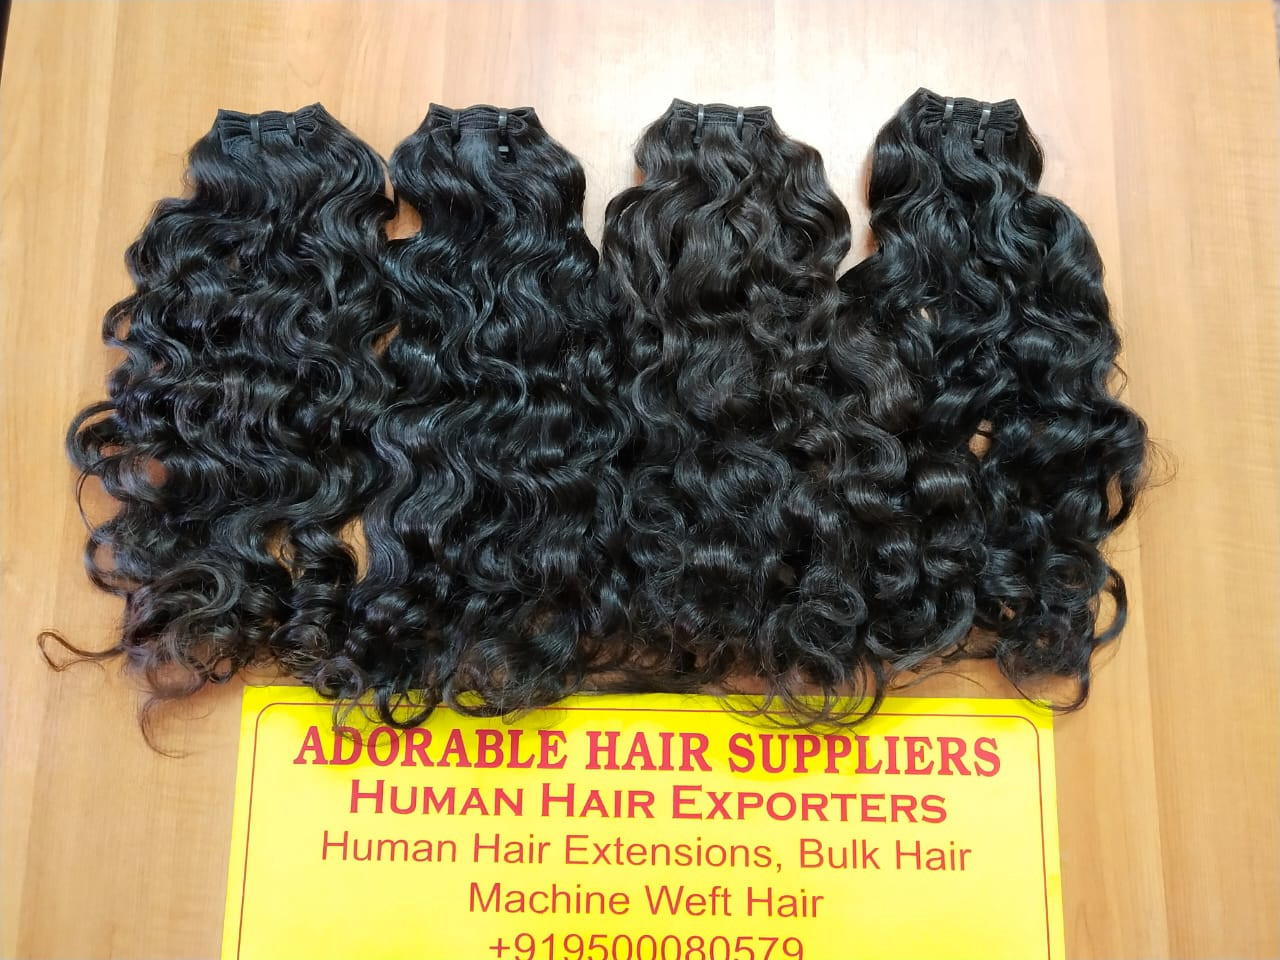 Wholesale Hair Vendors from India, Bulk Hair Distributors | Adorable Hair Suppliers